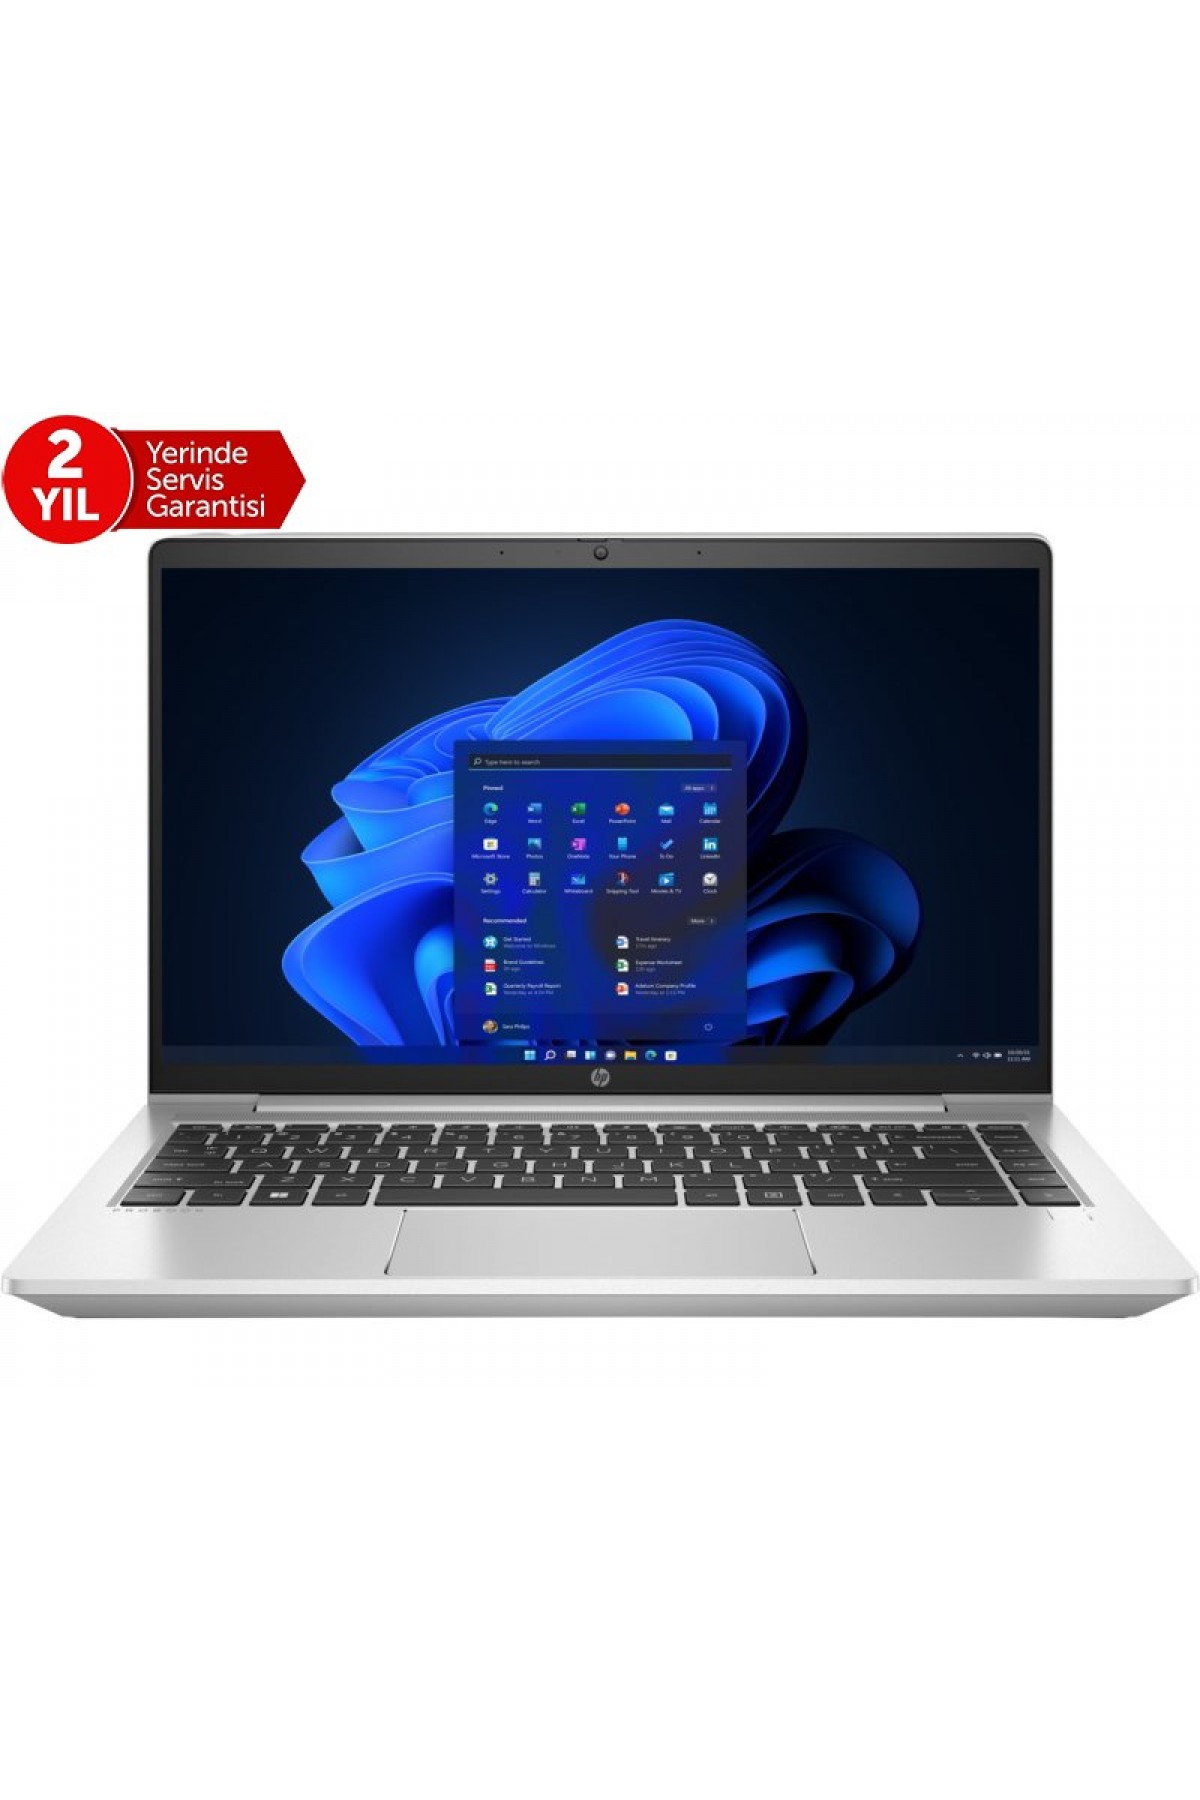 HP ProBook 440 G9 i7 1255 -14''-8G-256SSD-2G-Dos MX570A 2GB, 2 Yıl Yerinde Garanti